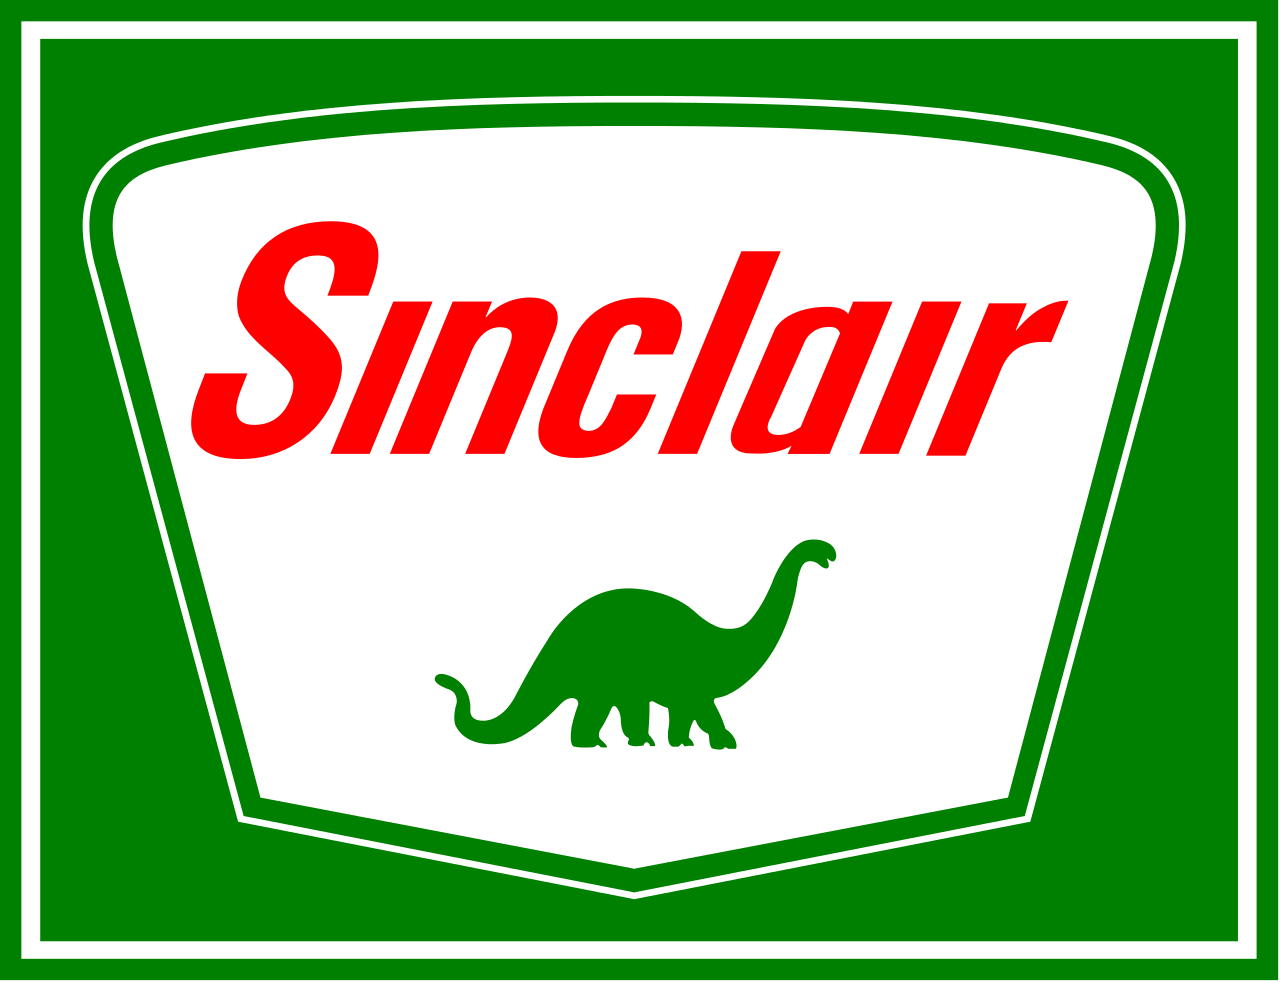 Old Oil Company Logo - Sinclair Logos